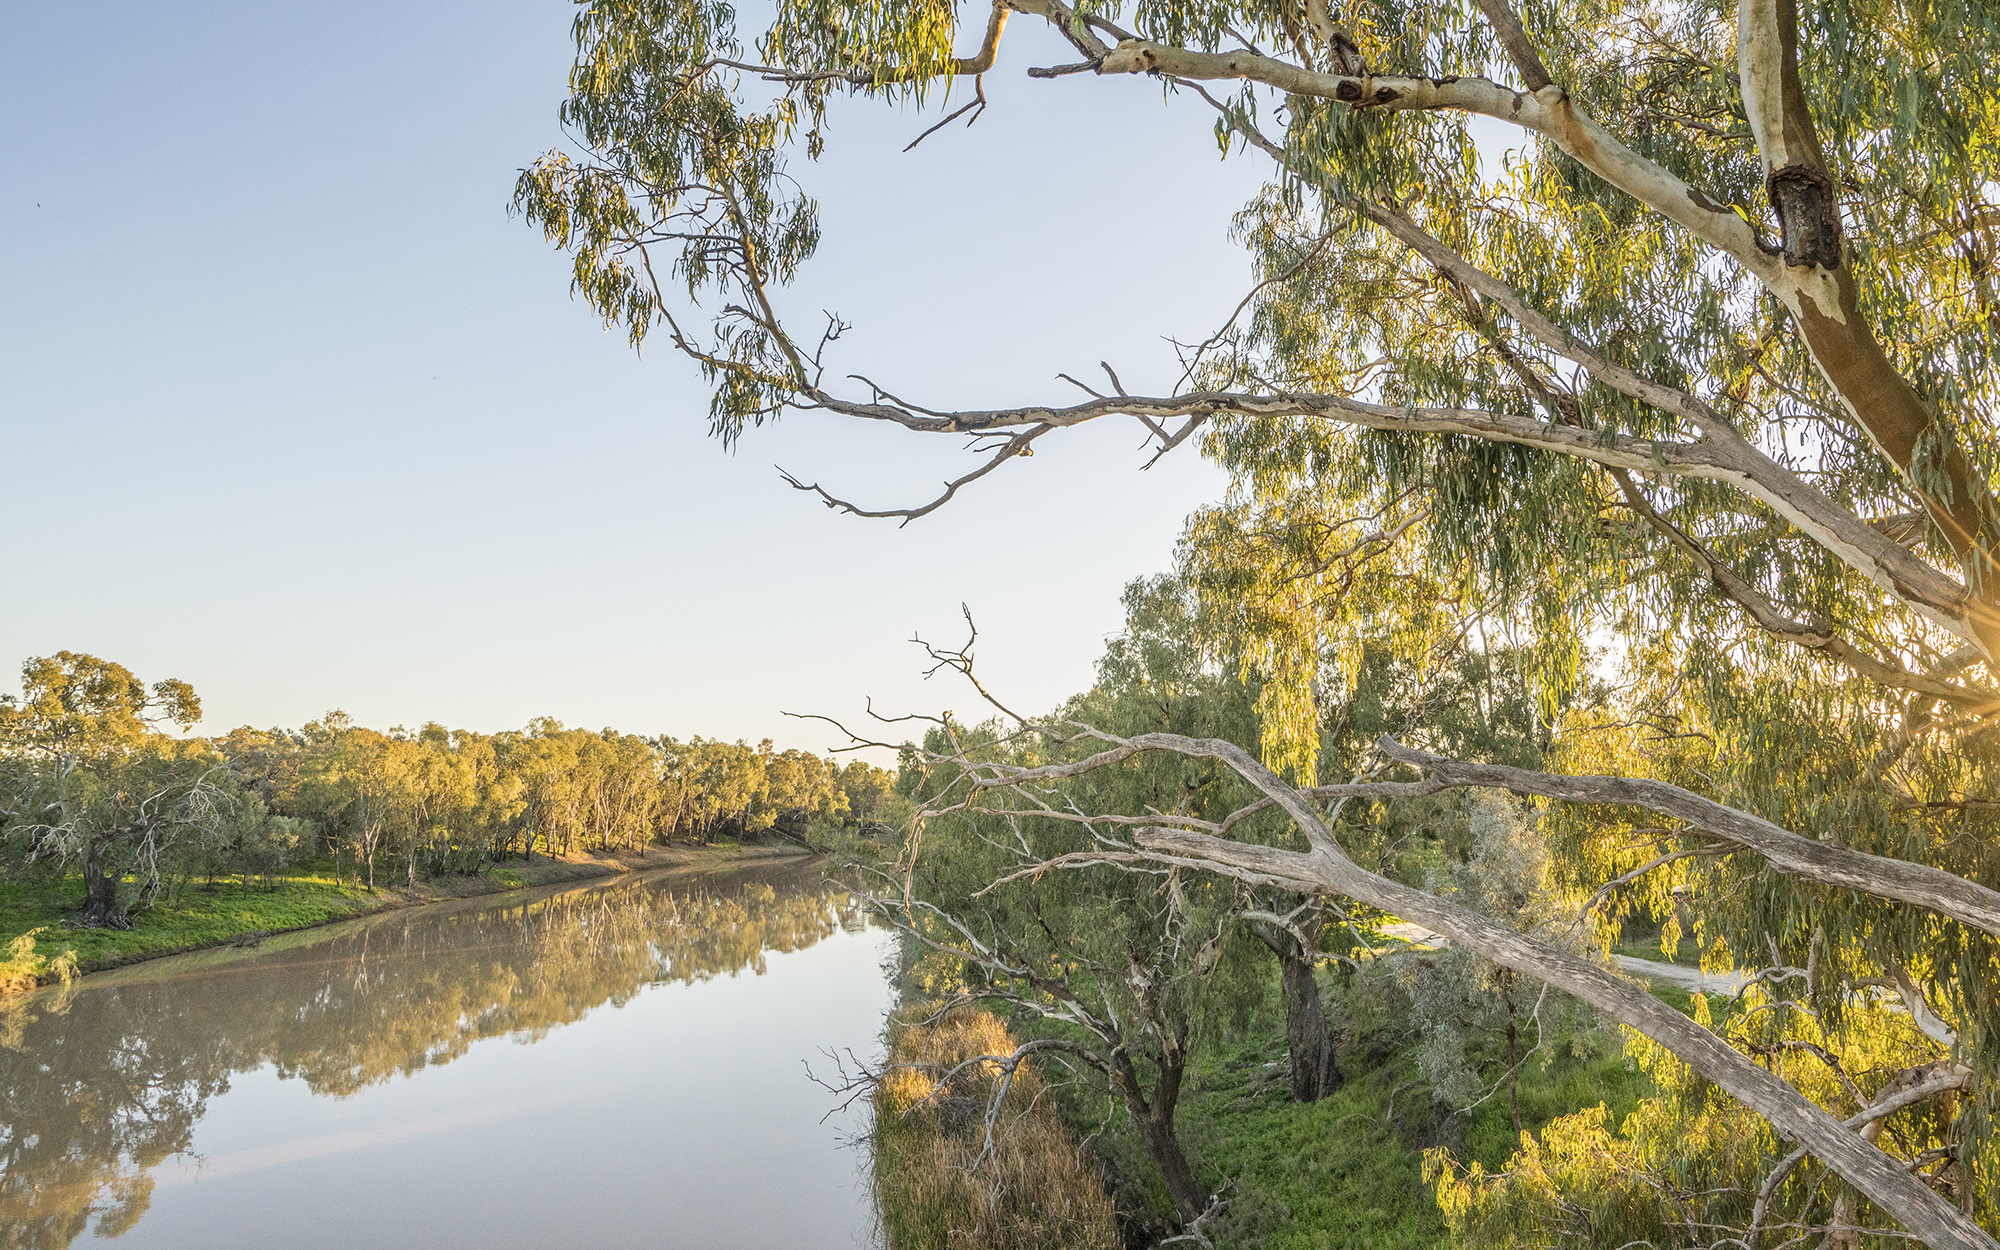 The sun rising over the scenic Darling River, Bourke.